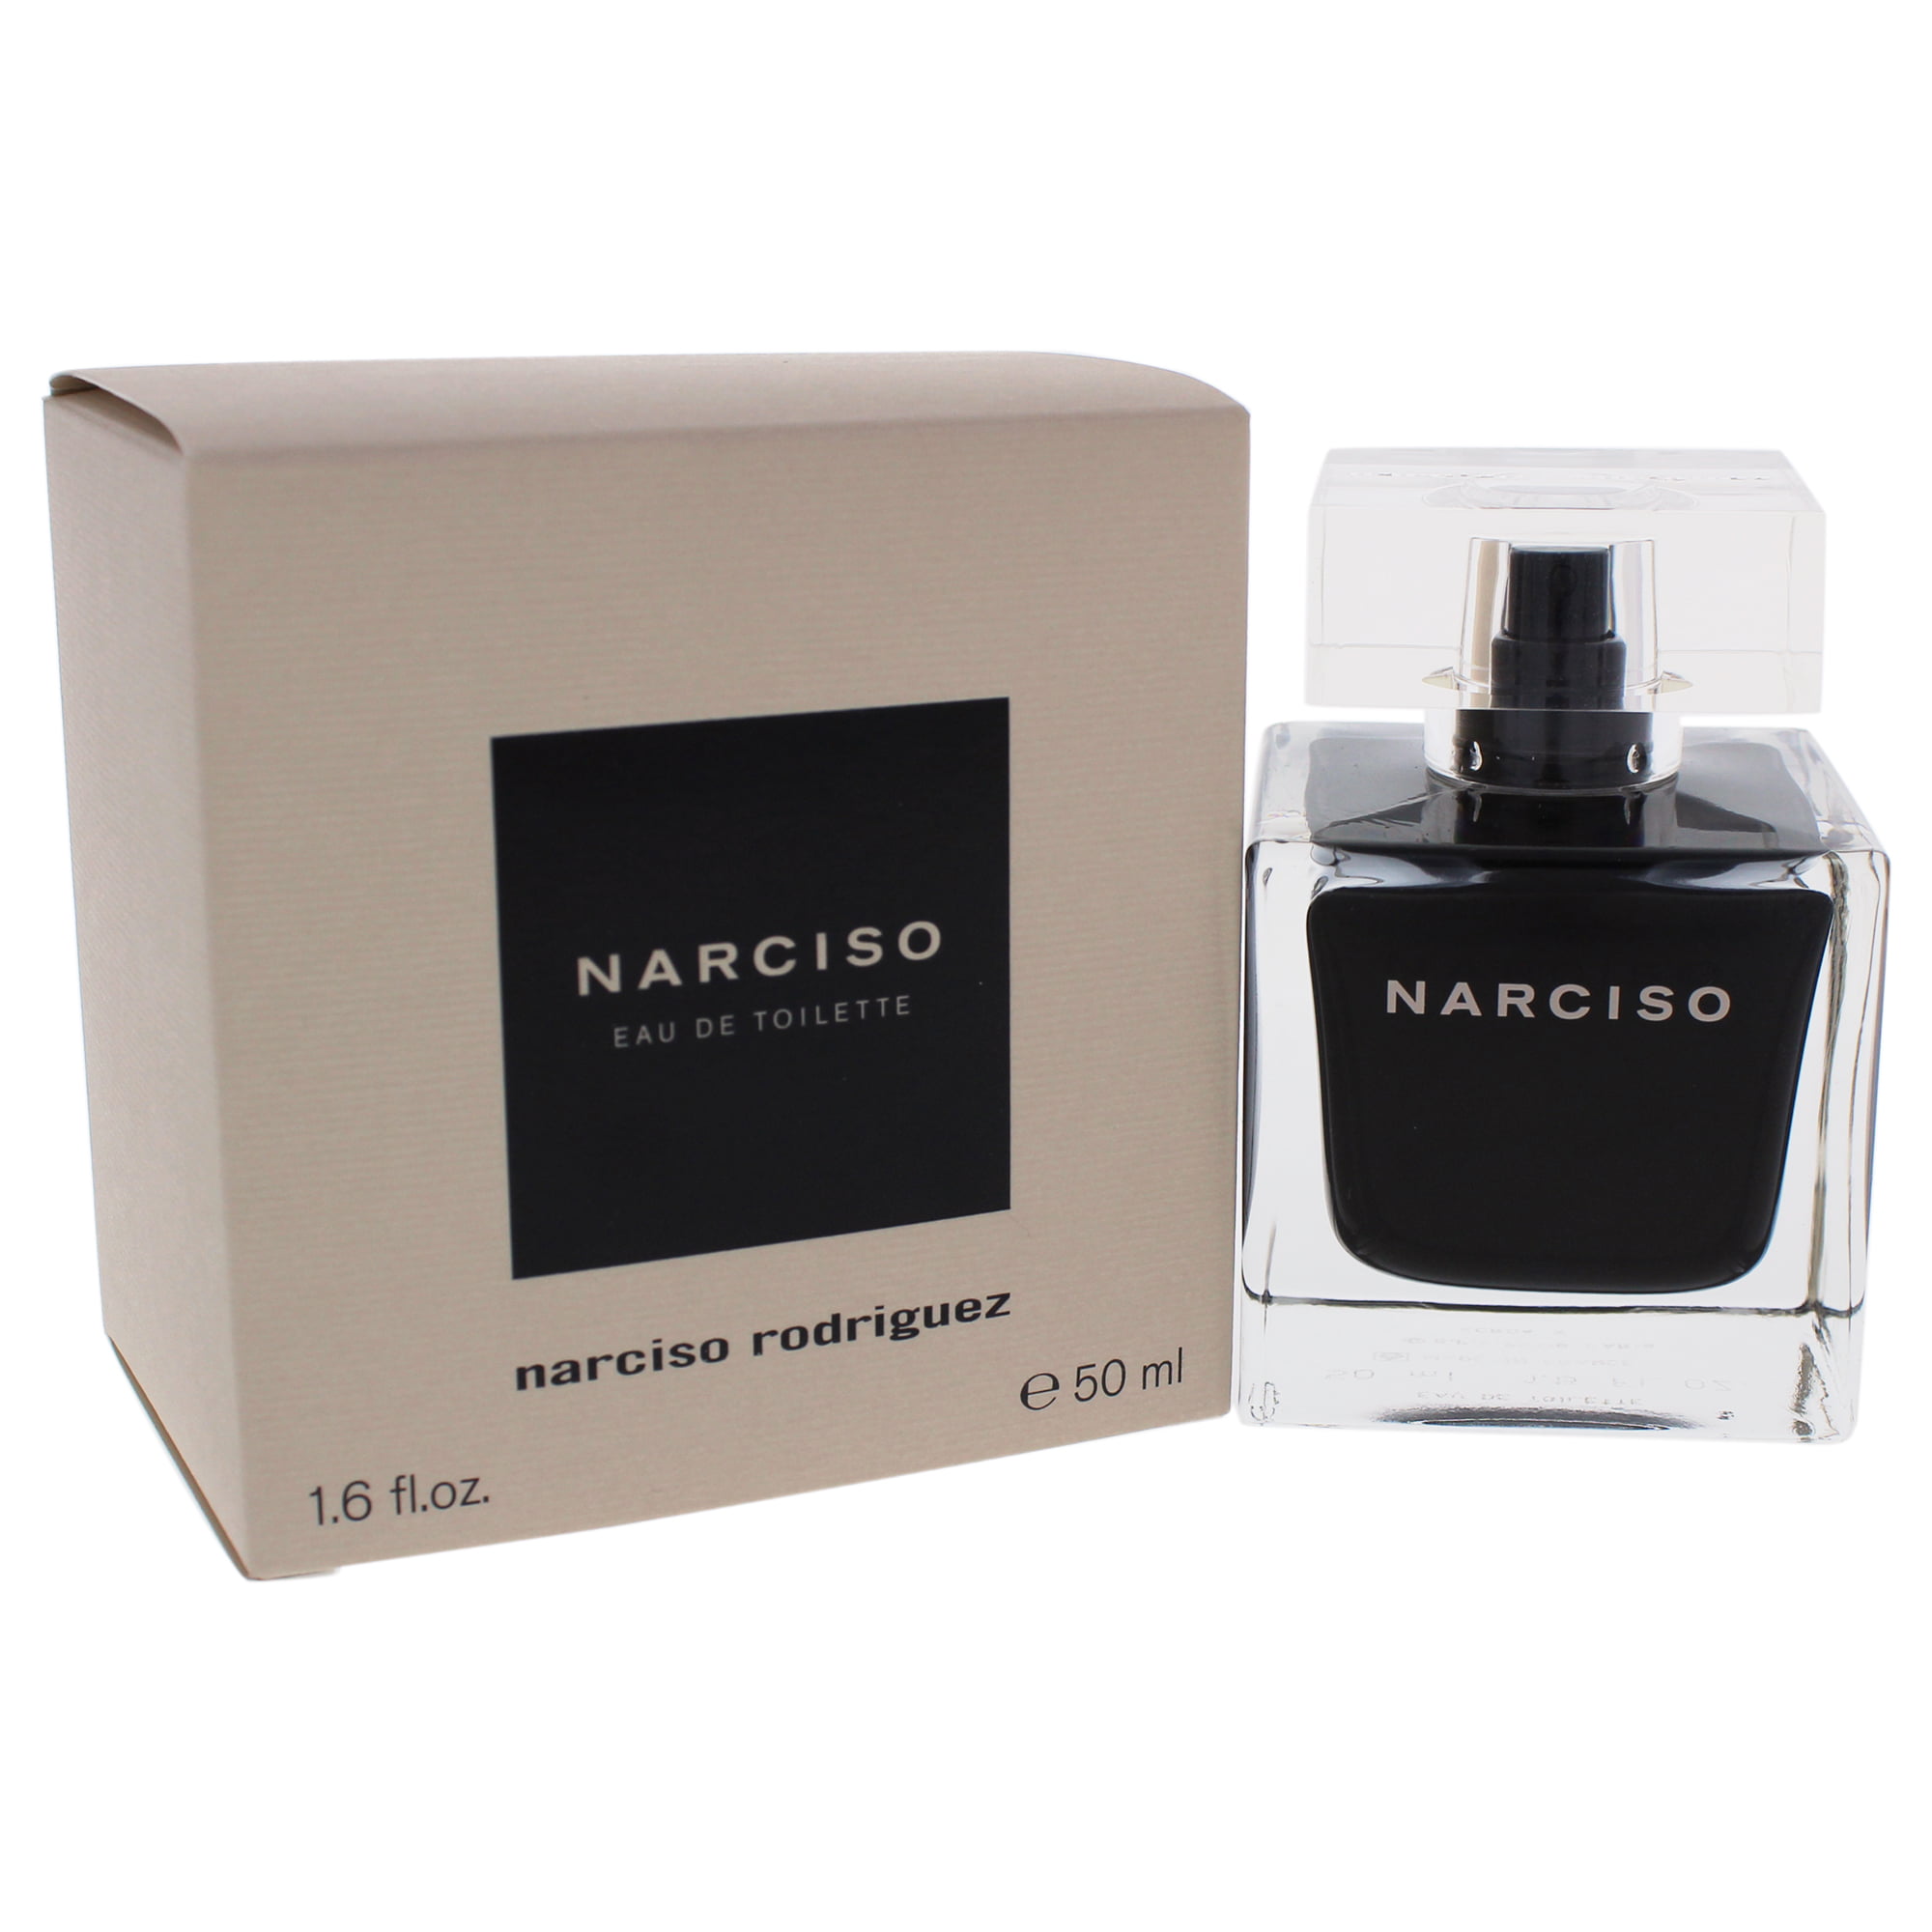 Narciso Rodriguez Narciso Eau de Toilette, Perfume for Women, 1.6 Oz 